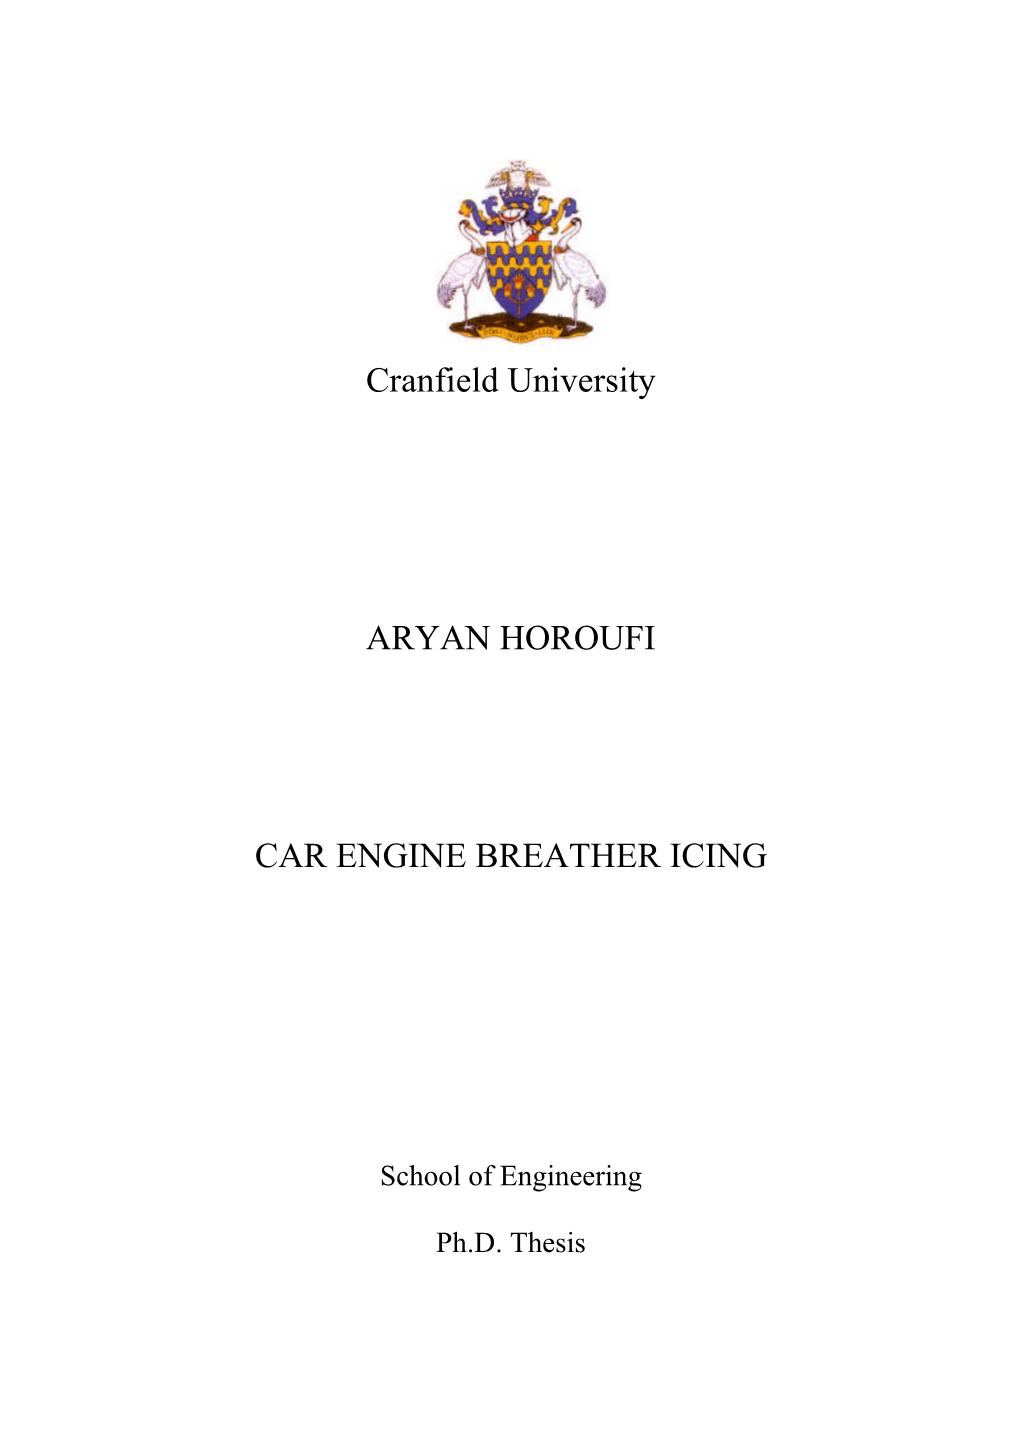 Cranfield University ARYAN HOROUFI CAR ENGINE